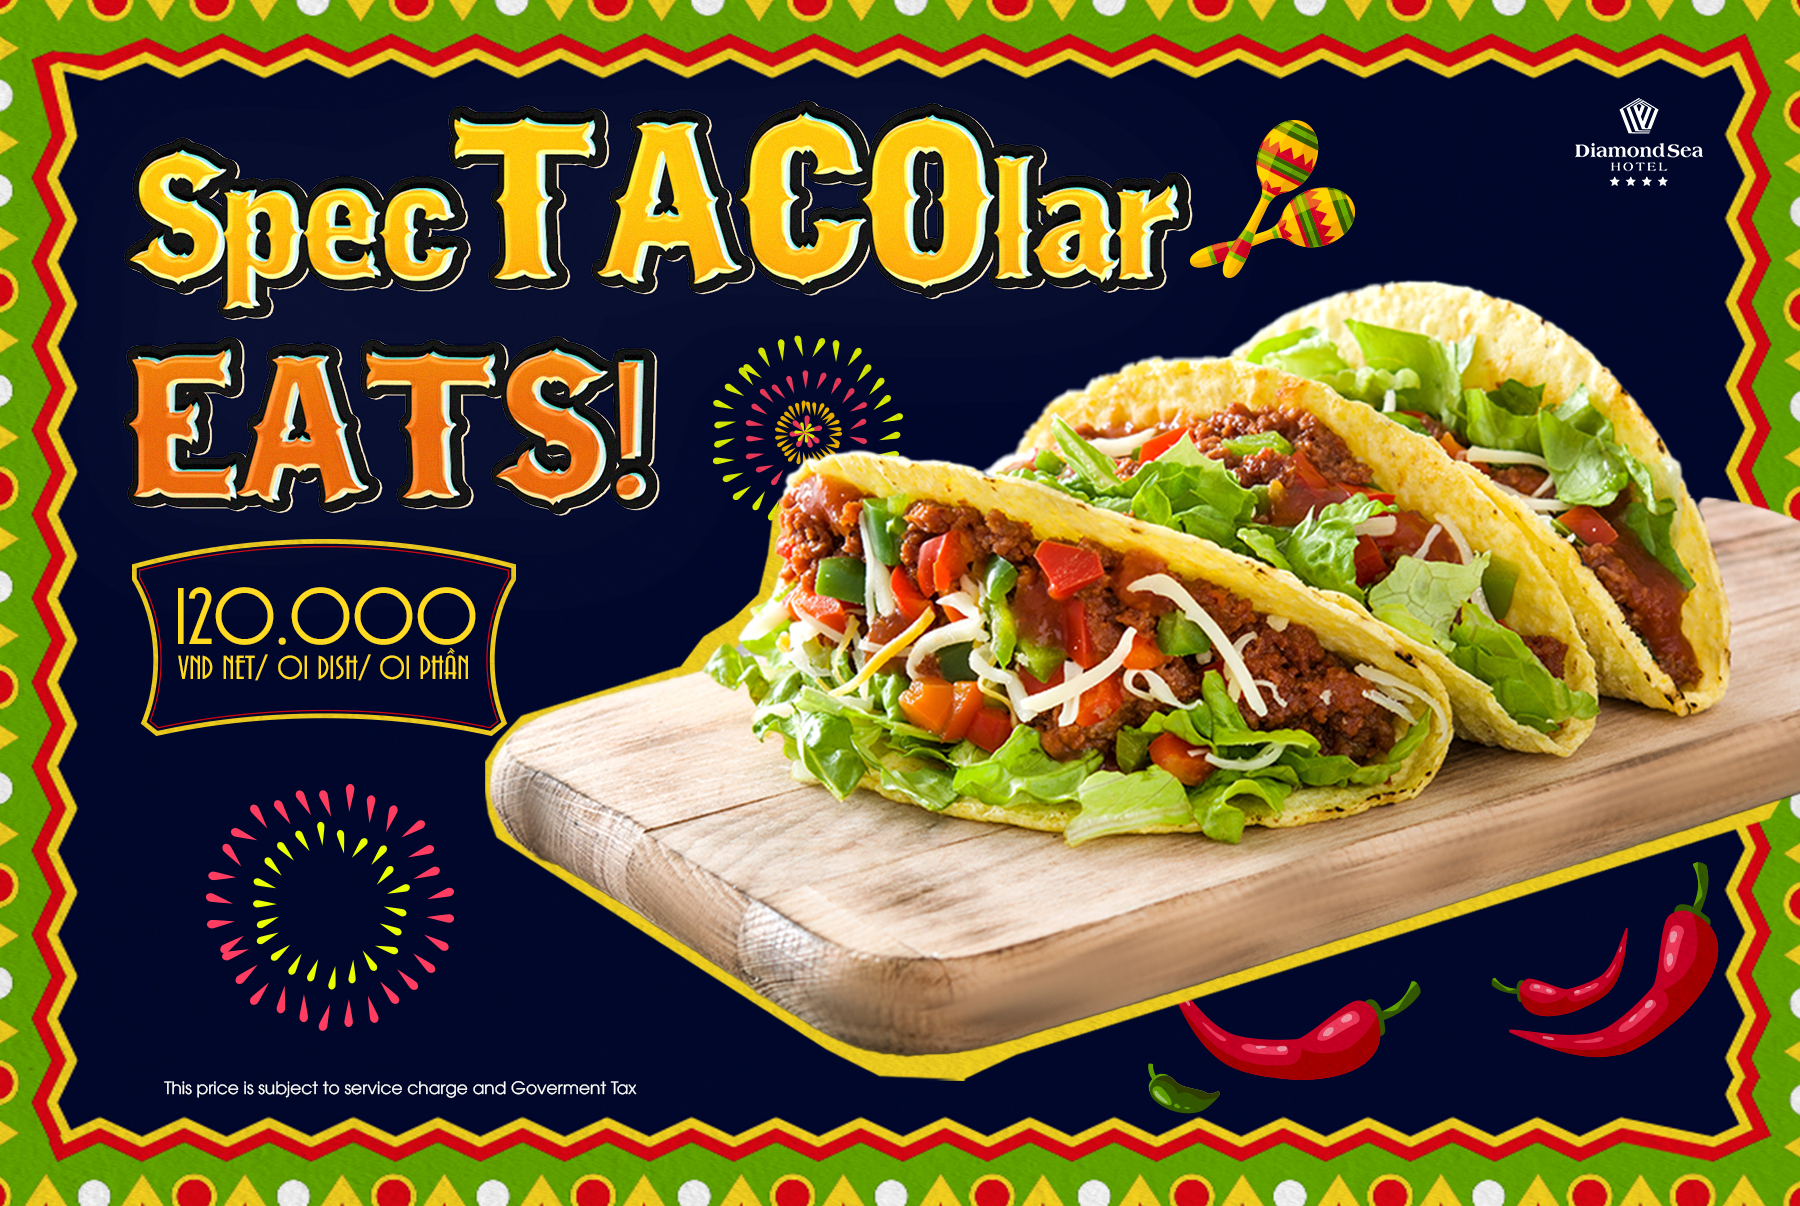 “SpecTACOlar Eats” - Immersive In Mexican Cuisine